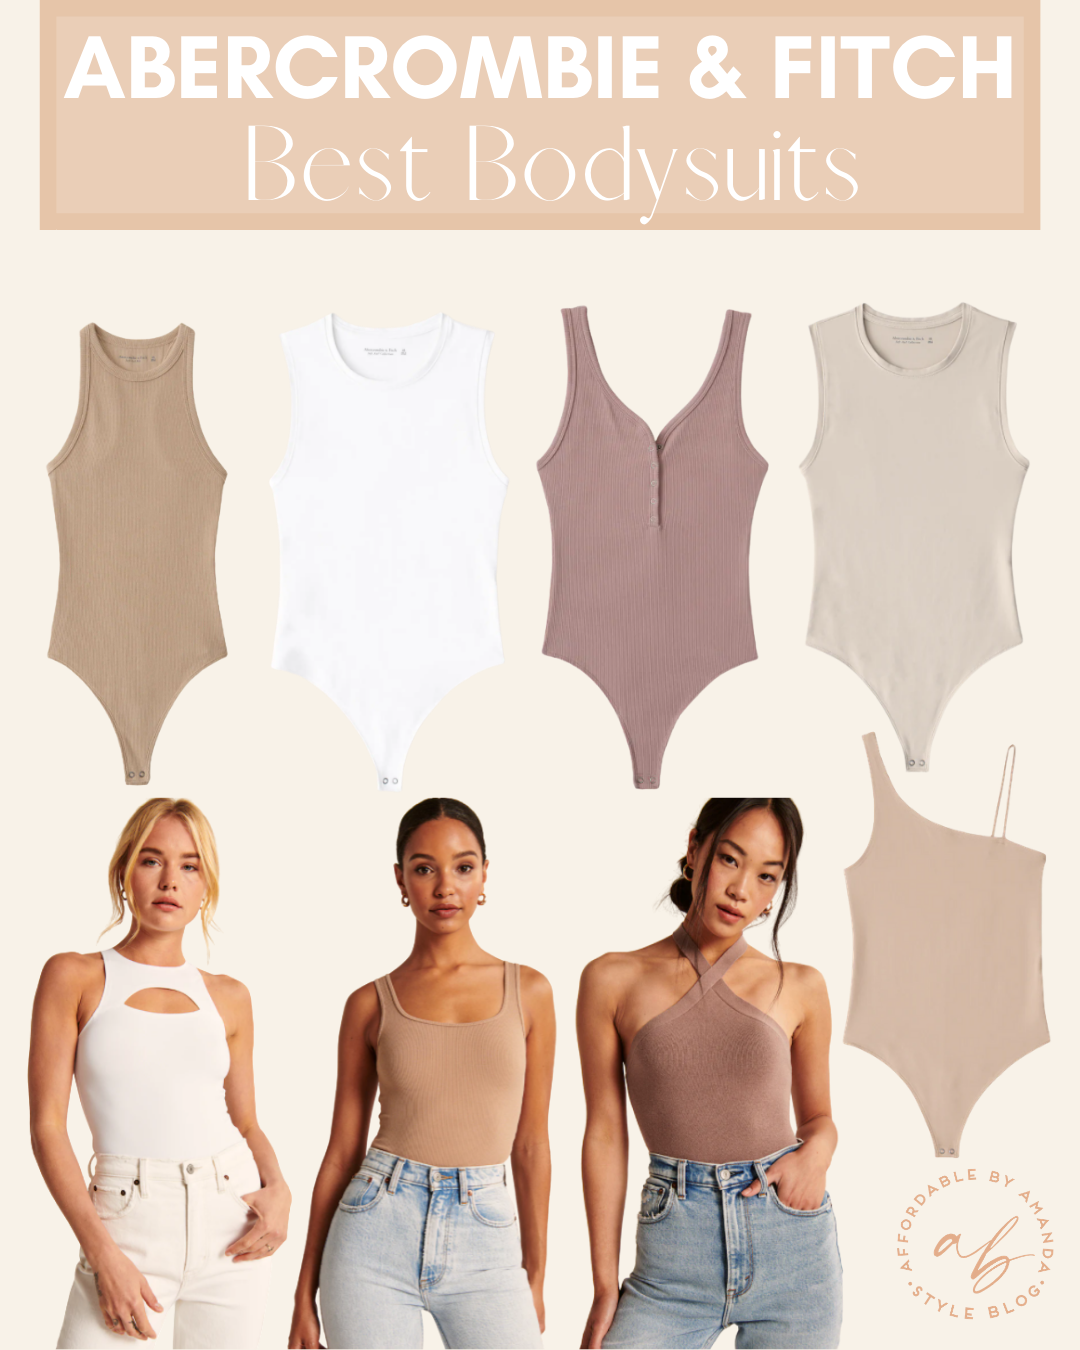 Best Bodysuits for Summer - Affordable by Amanda